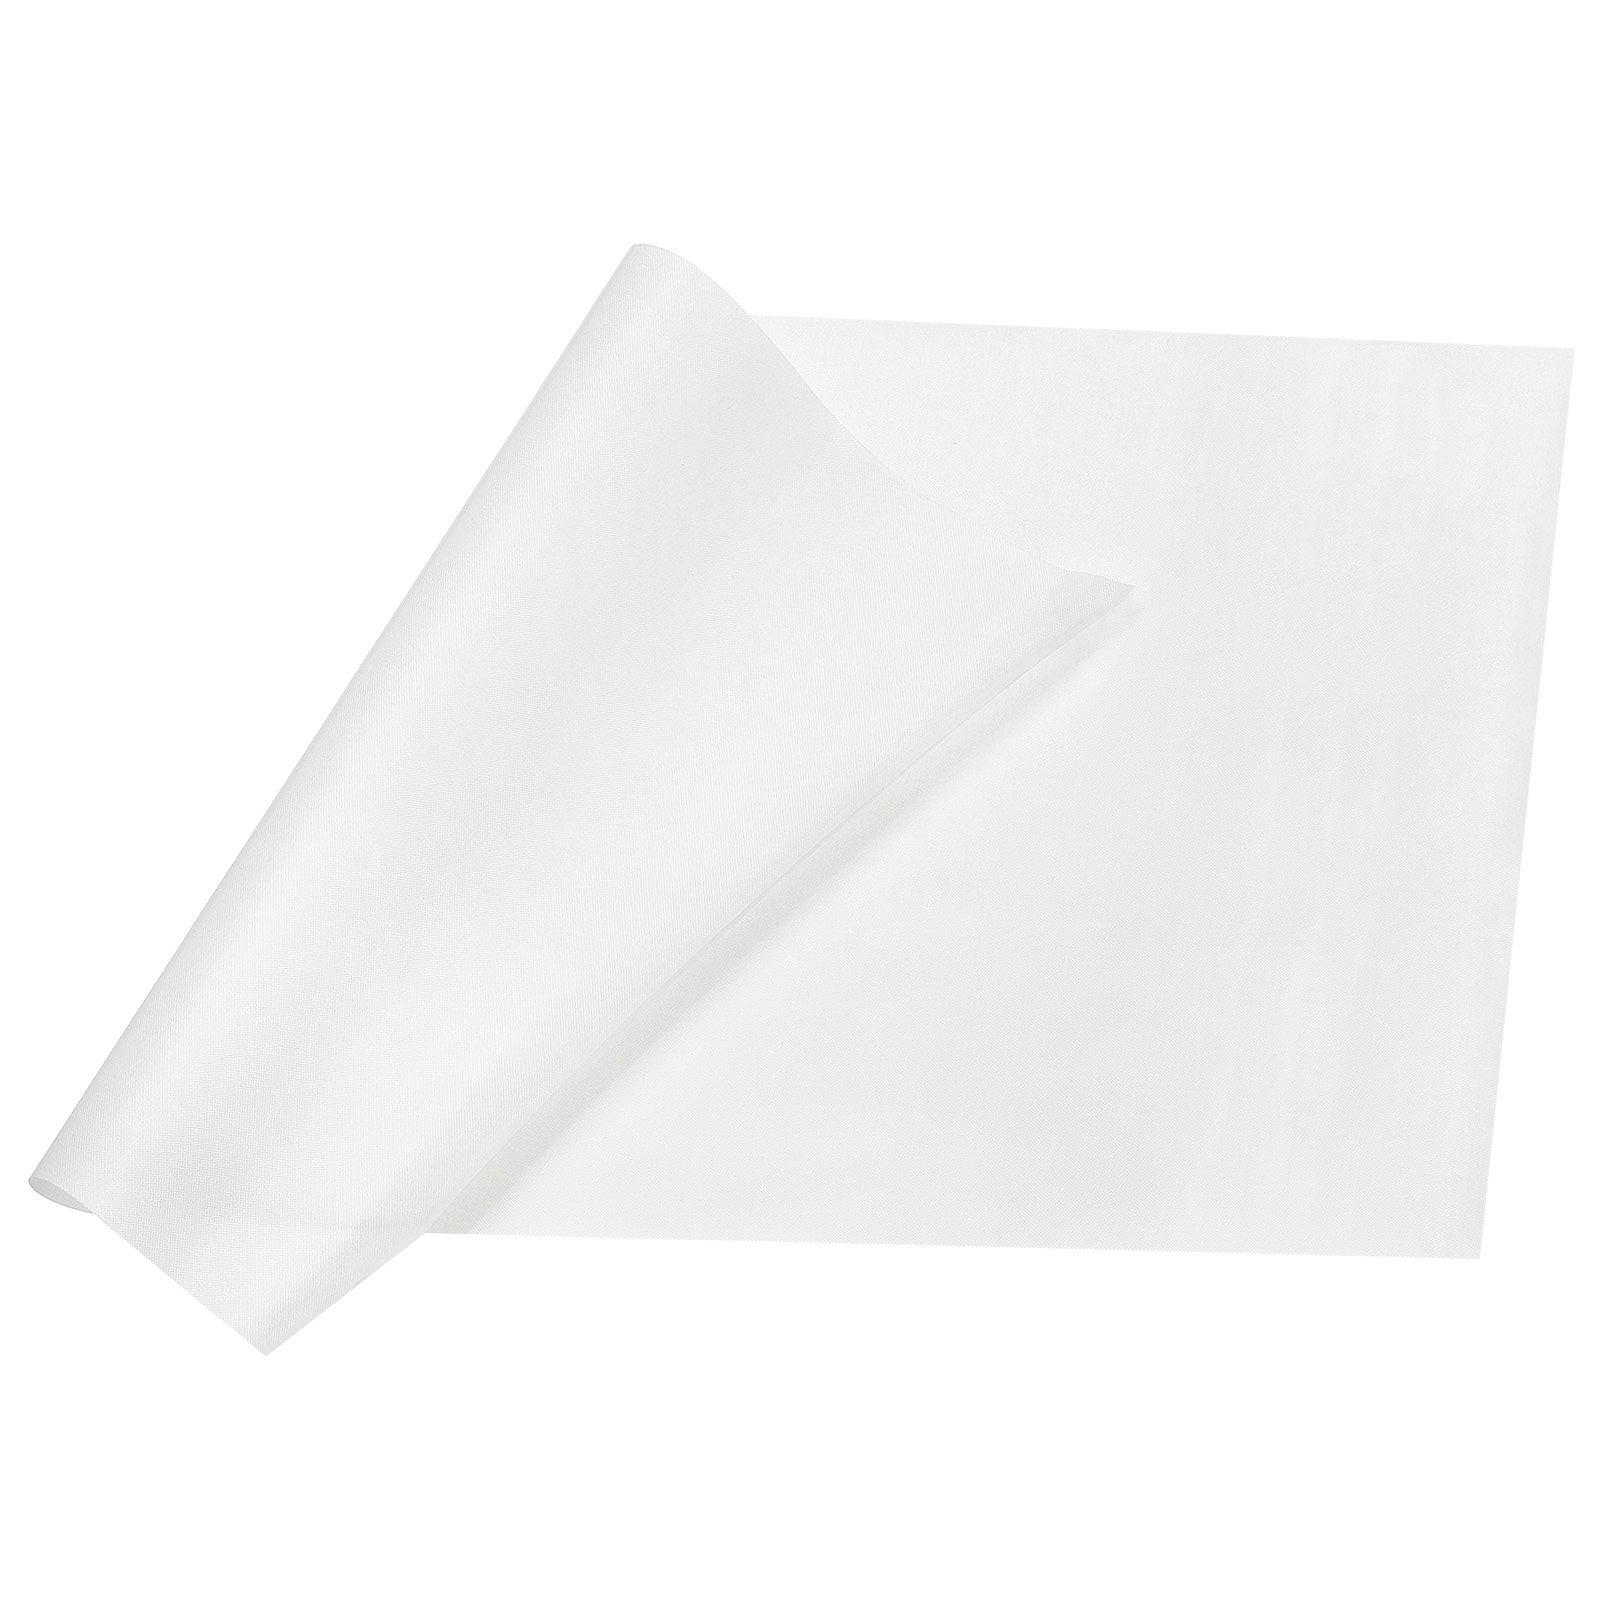 Uxcell Heat Press Transfer Sheet 1pcs, 23.62 inch x 15.75 inch Heat Transfer Paper Reusable Heat Resistant Craft Mat, White